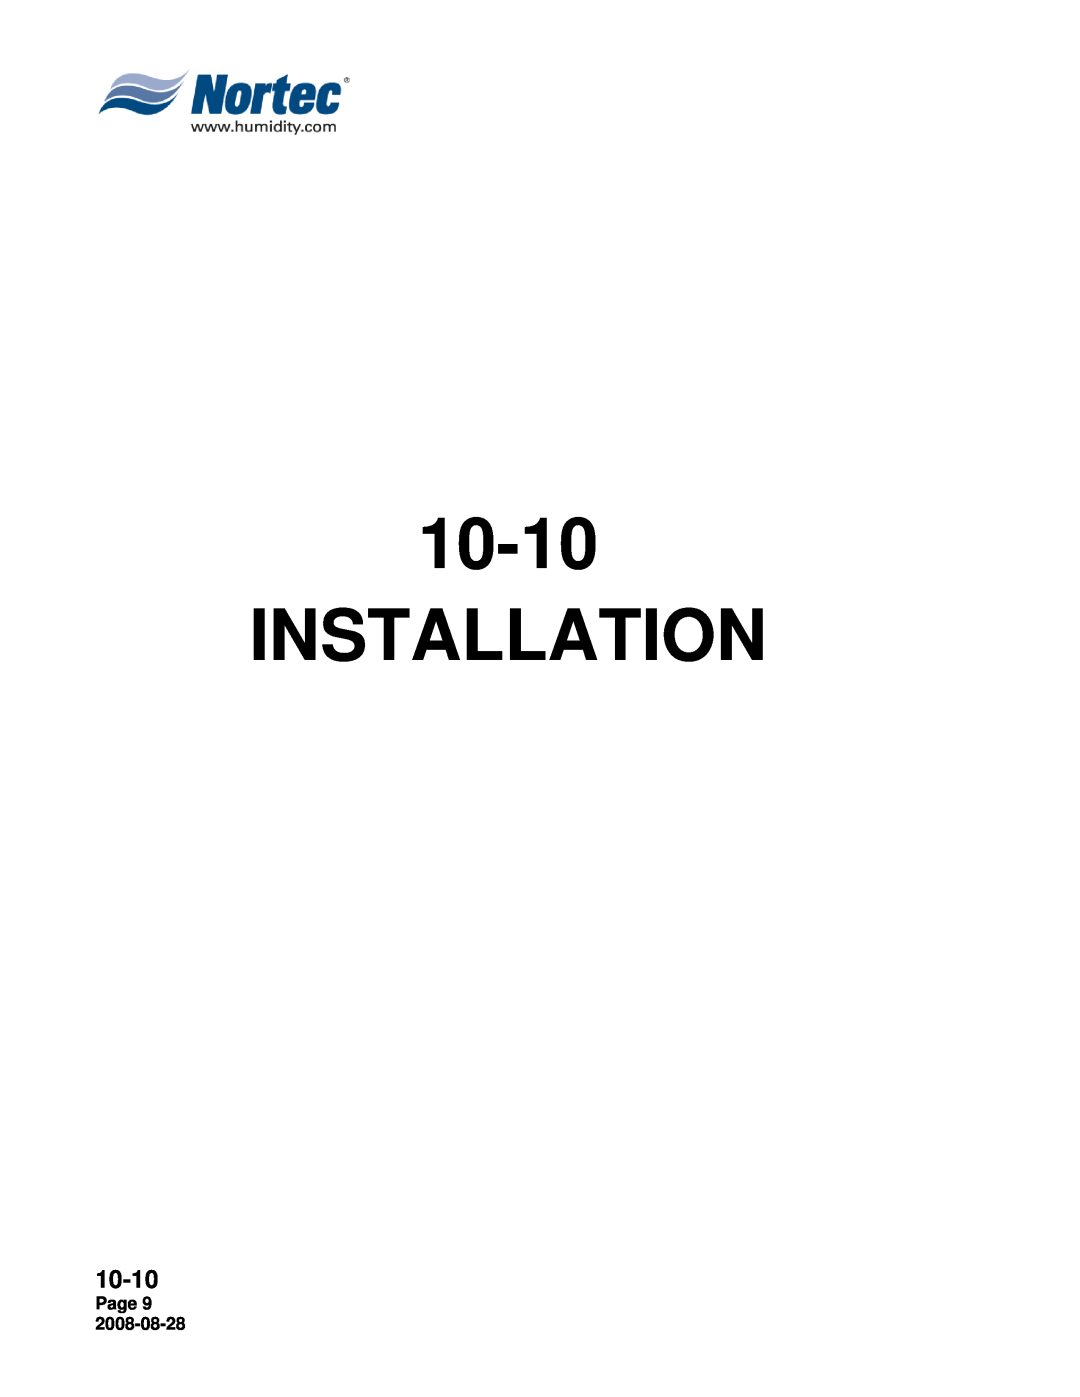 Nortec NH Series installation manual Installation, 10-10, Page 9 